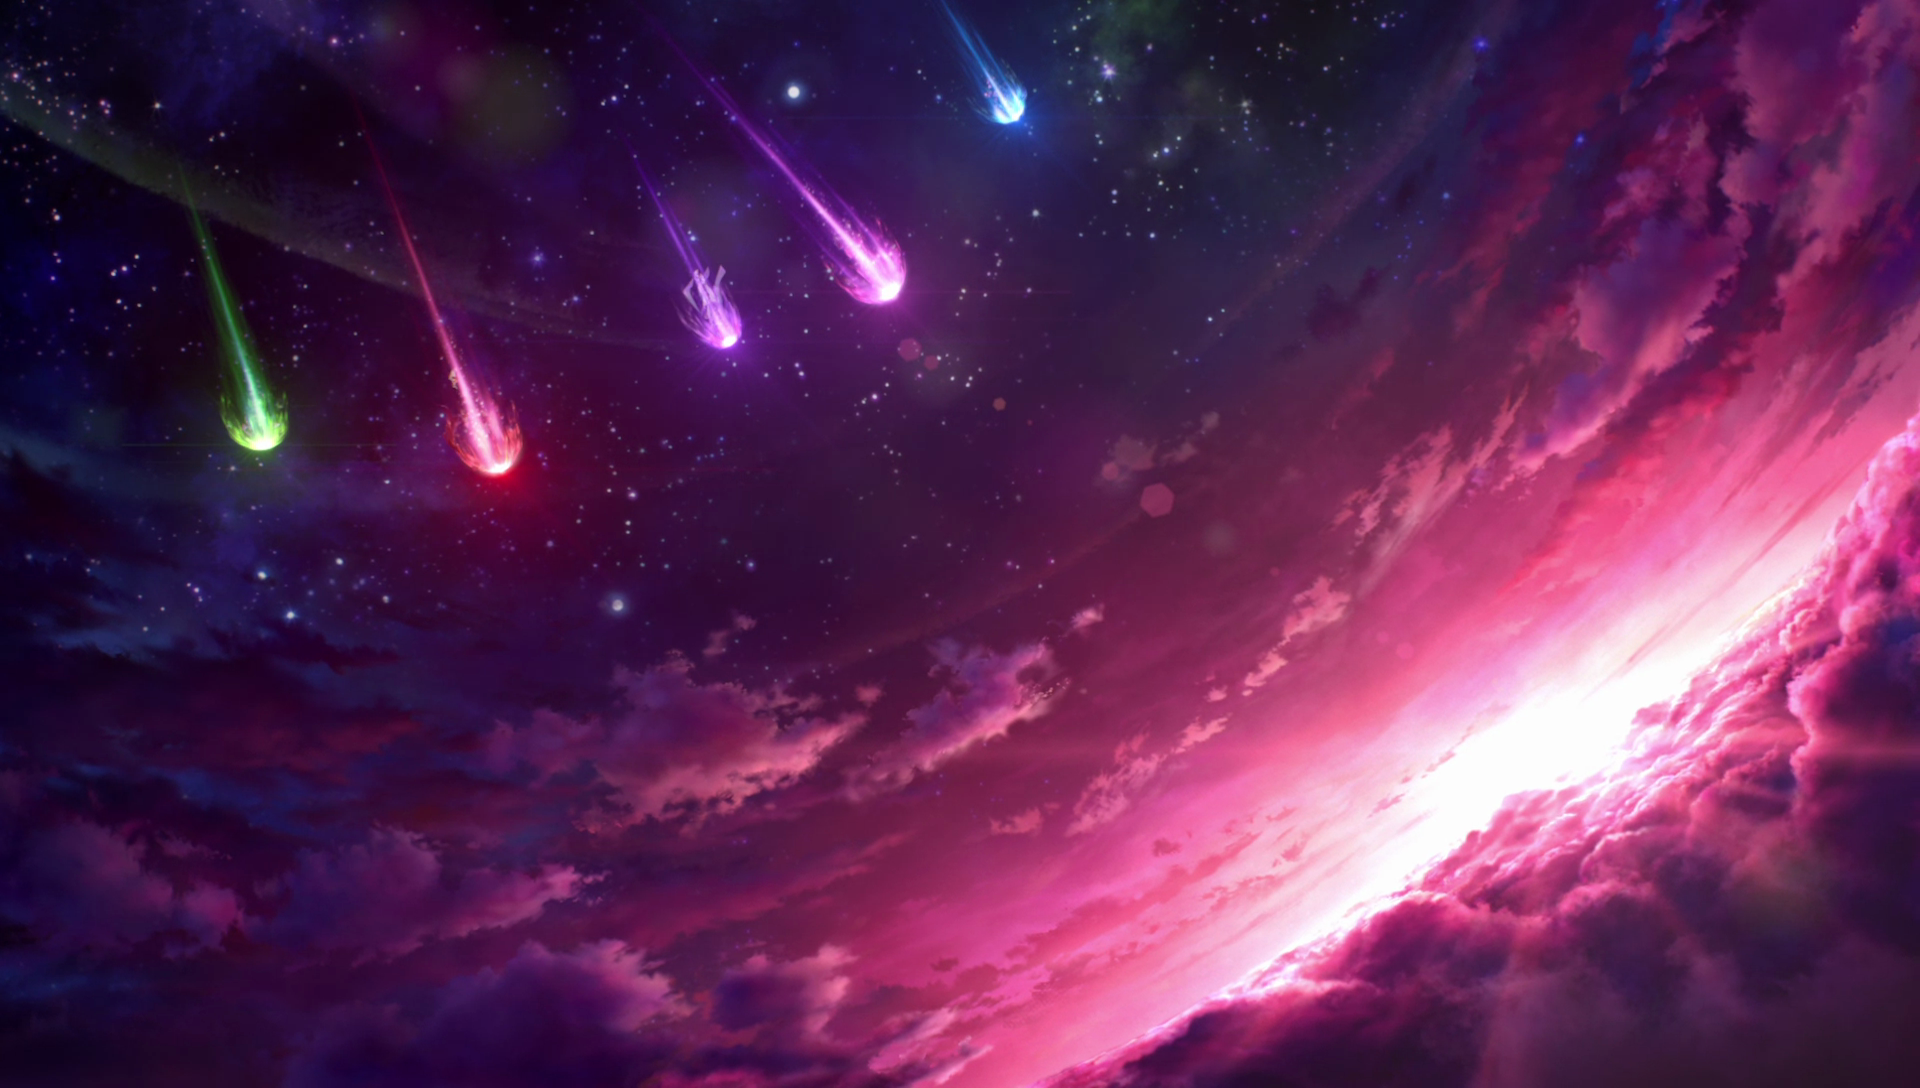 league of legends star guardian wallpaper,sky,nature,pink,outer space,light